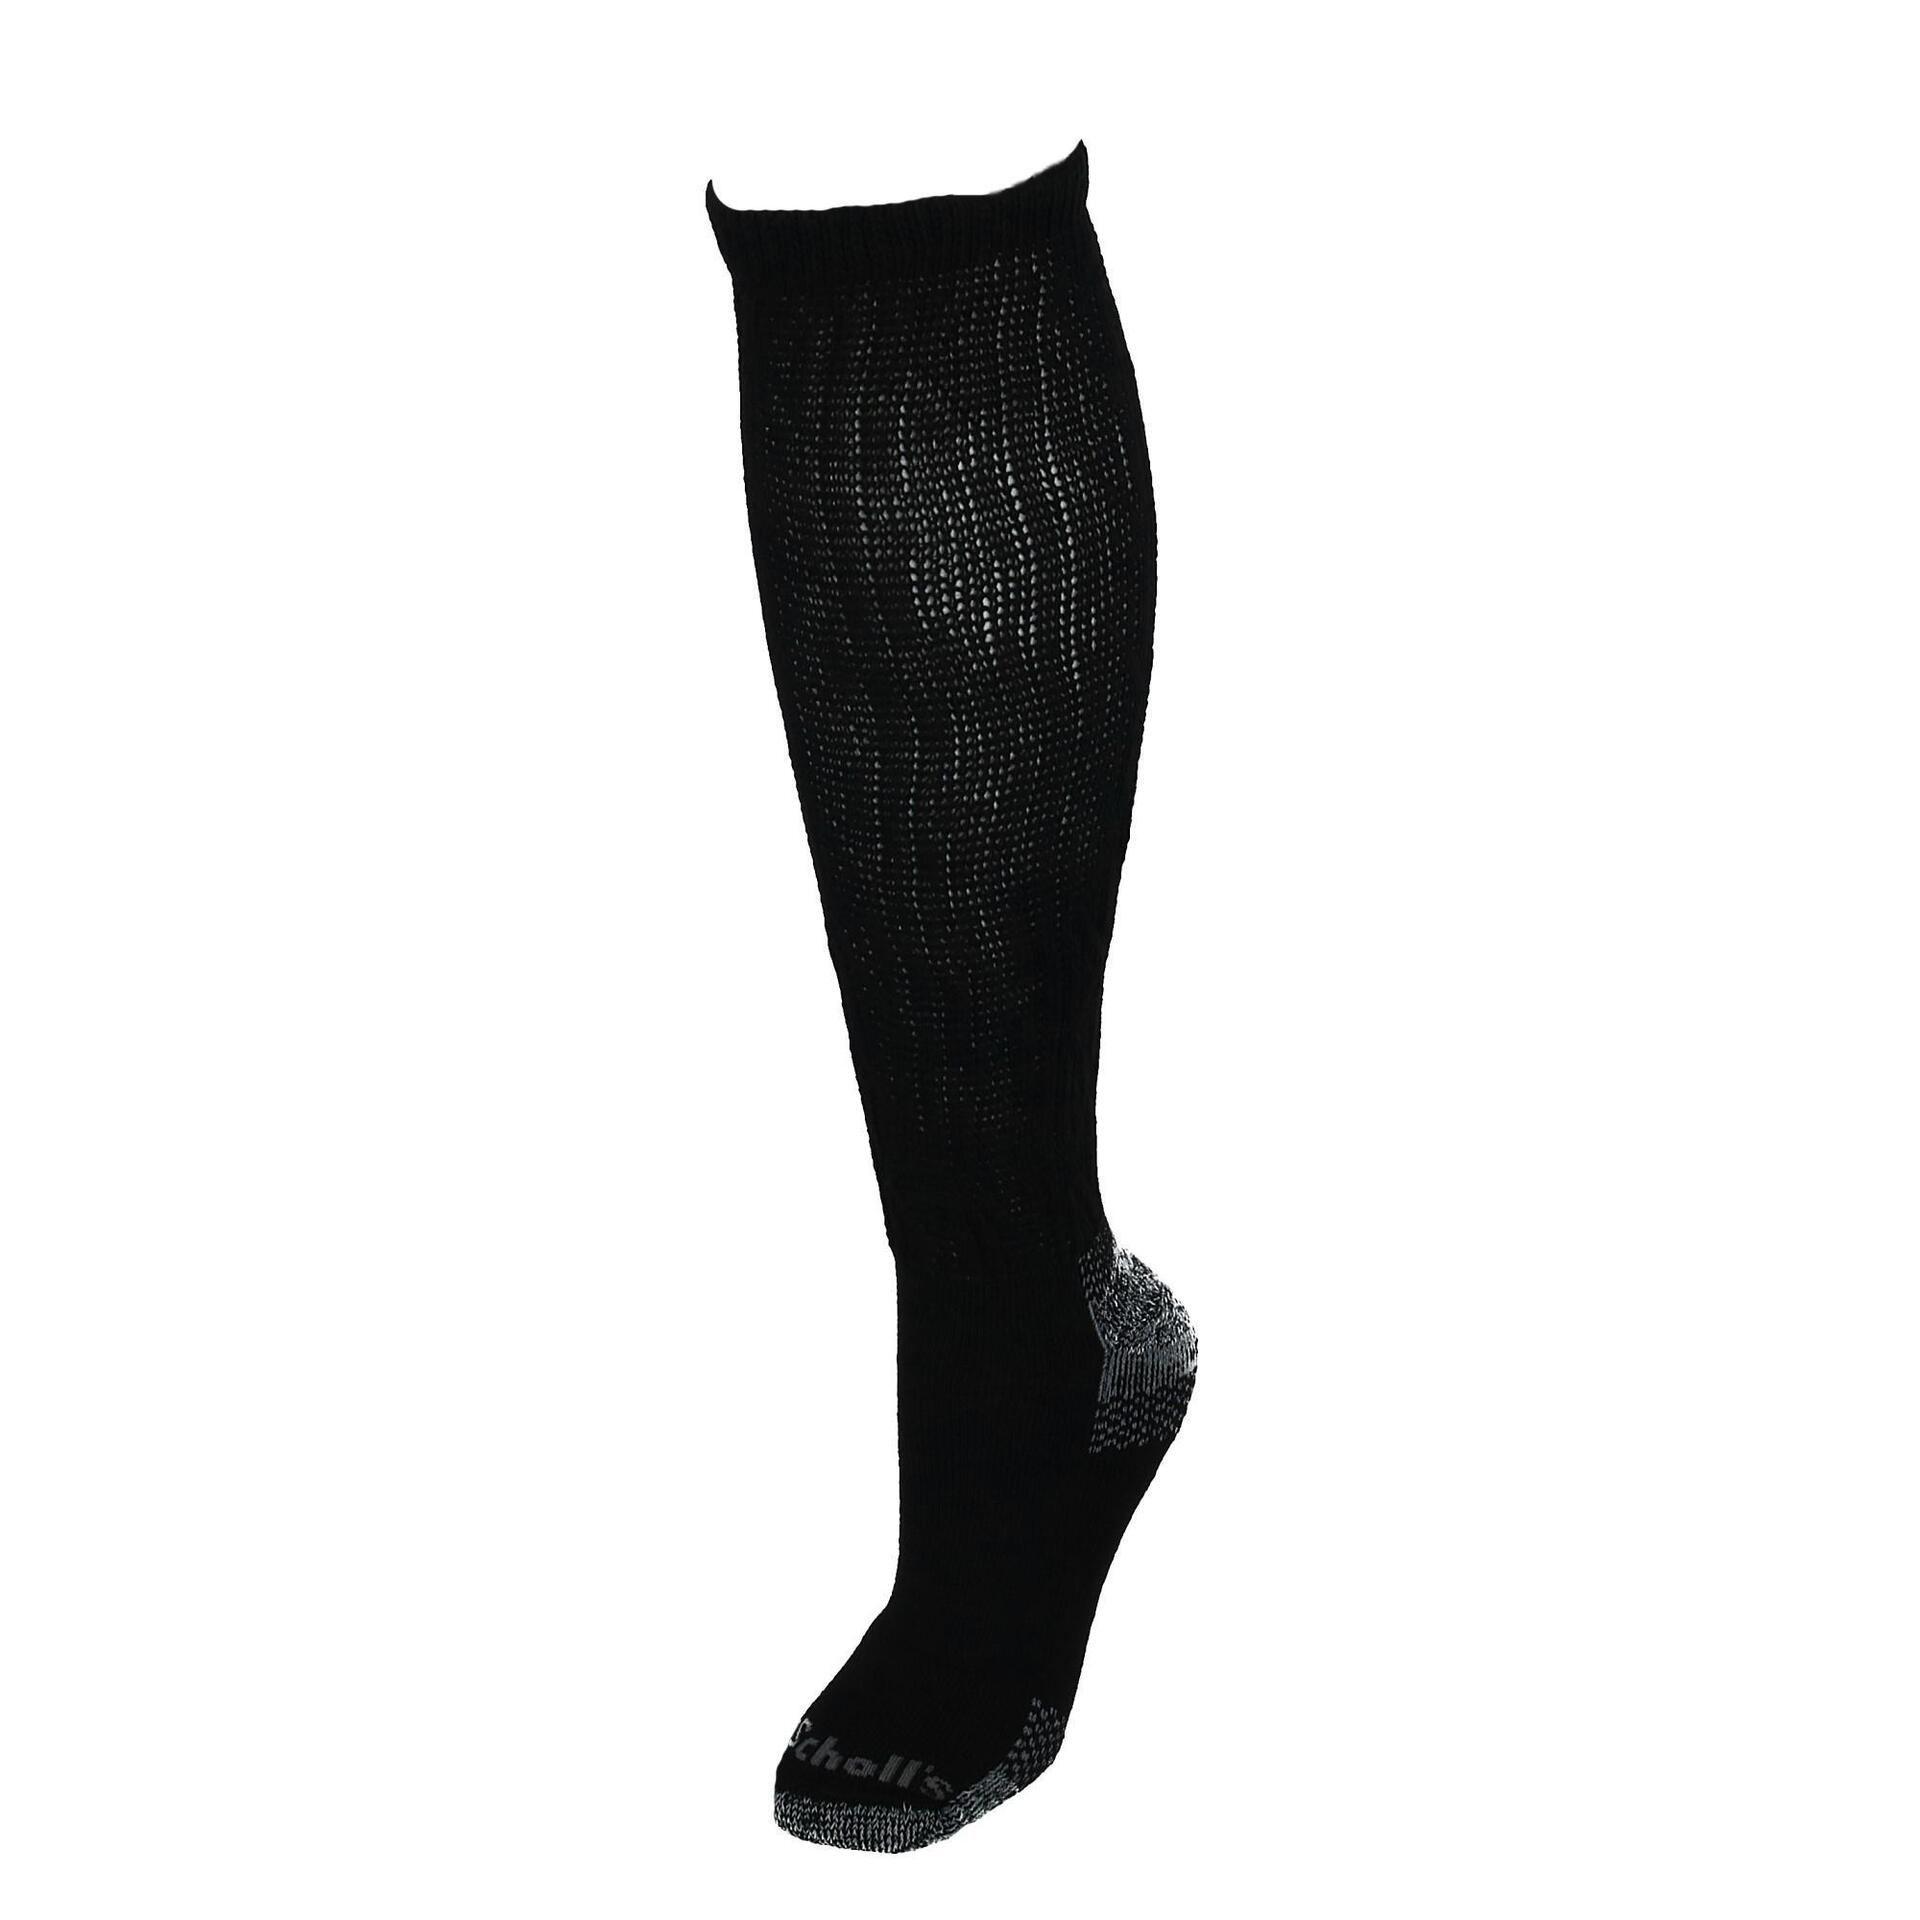 Dr Scholls Women's Blister Guard Advance Relief Knee Socks (Pack of 2)